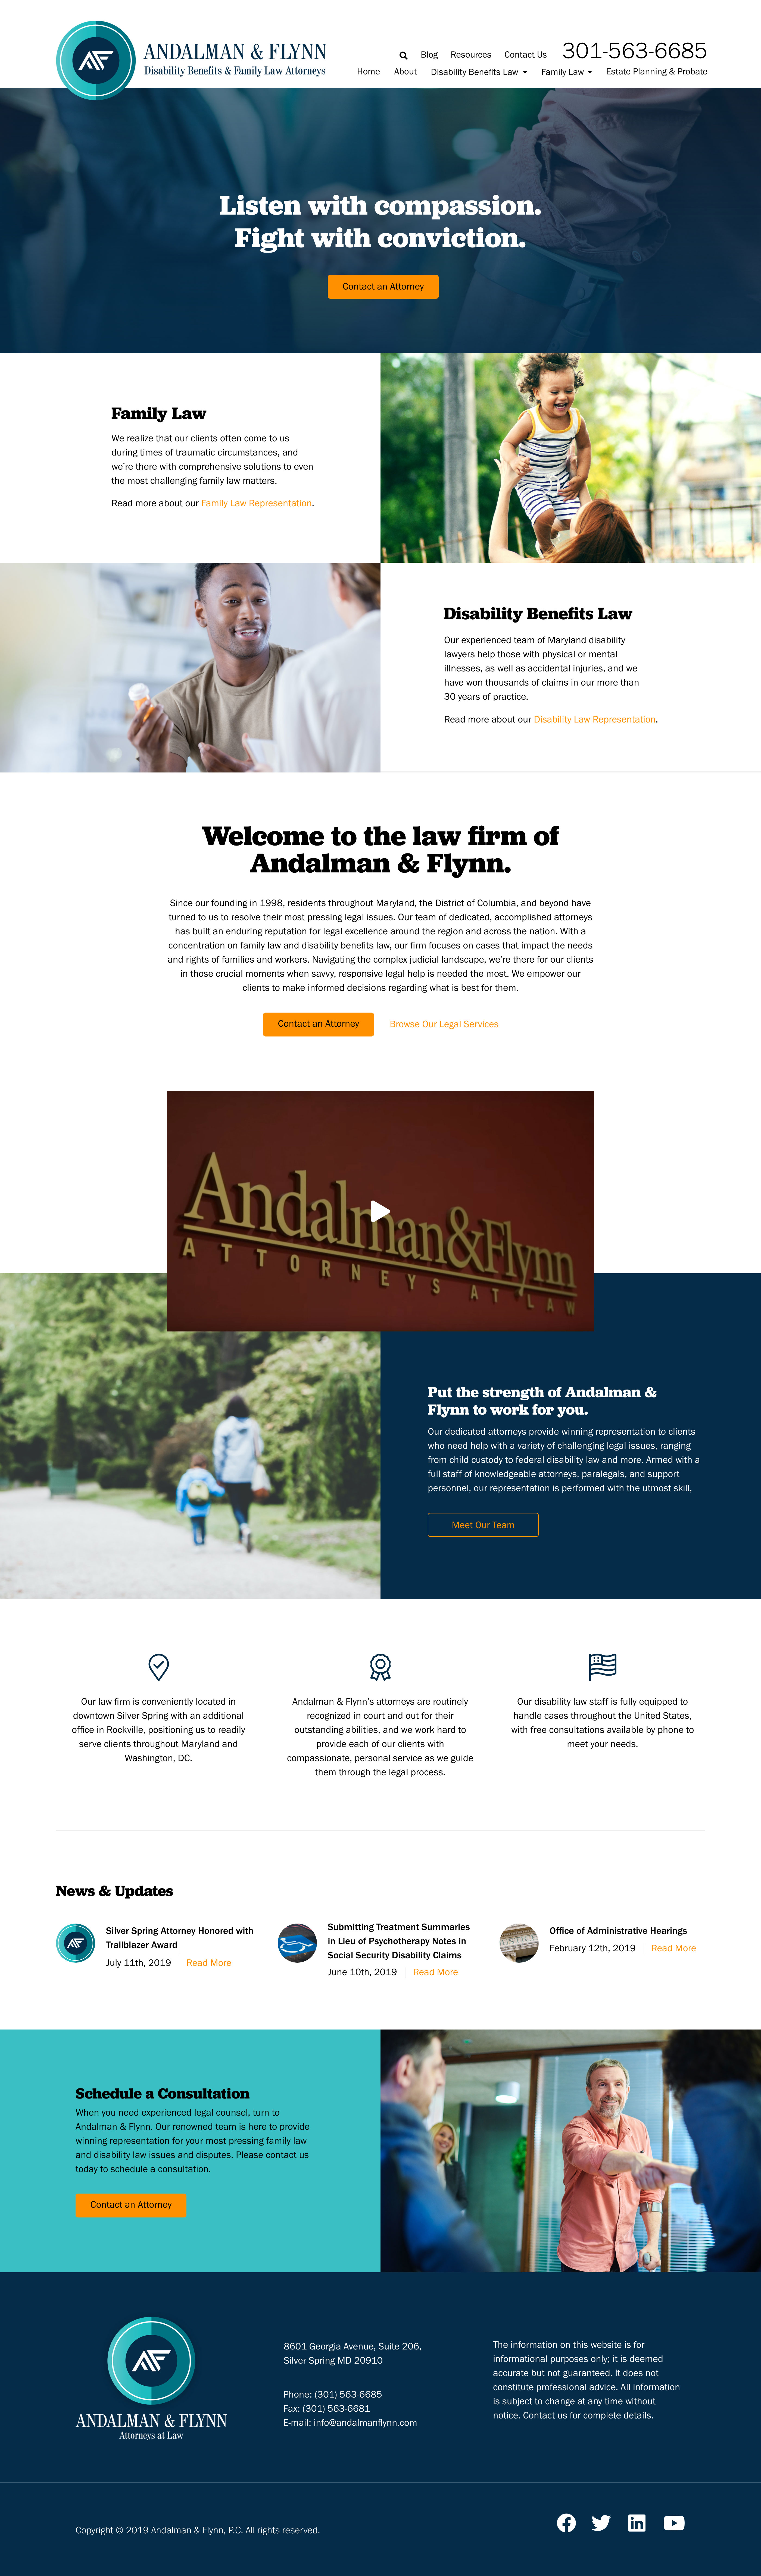 andalmanflynn.com desktop homepage